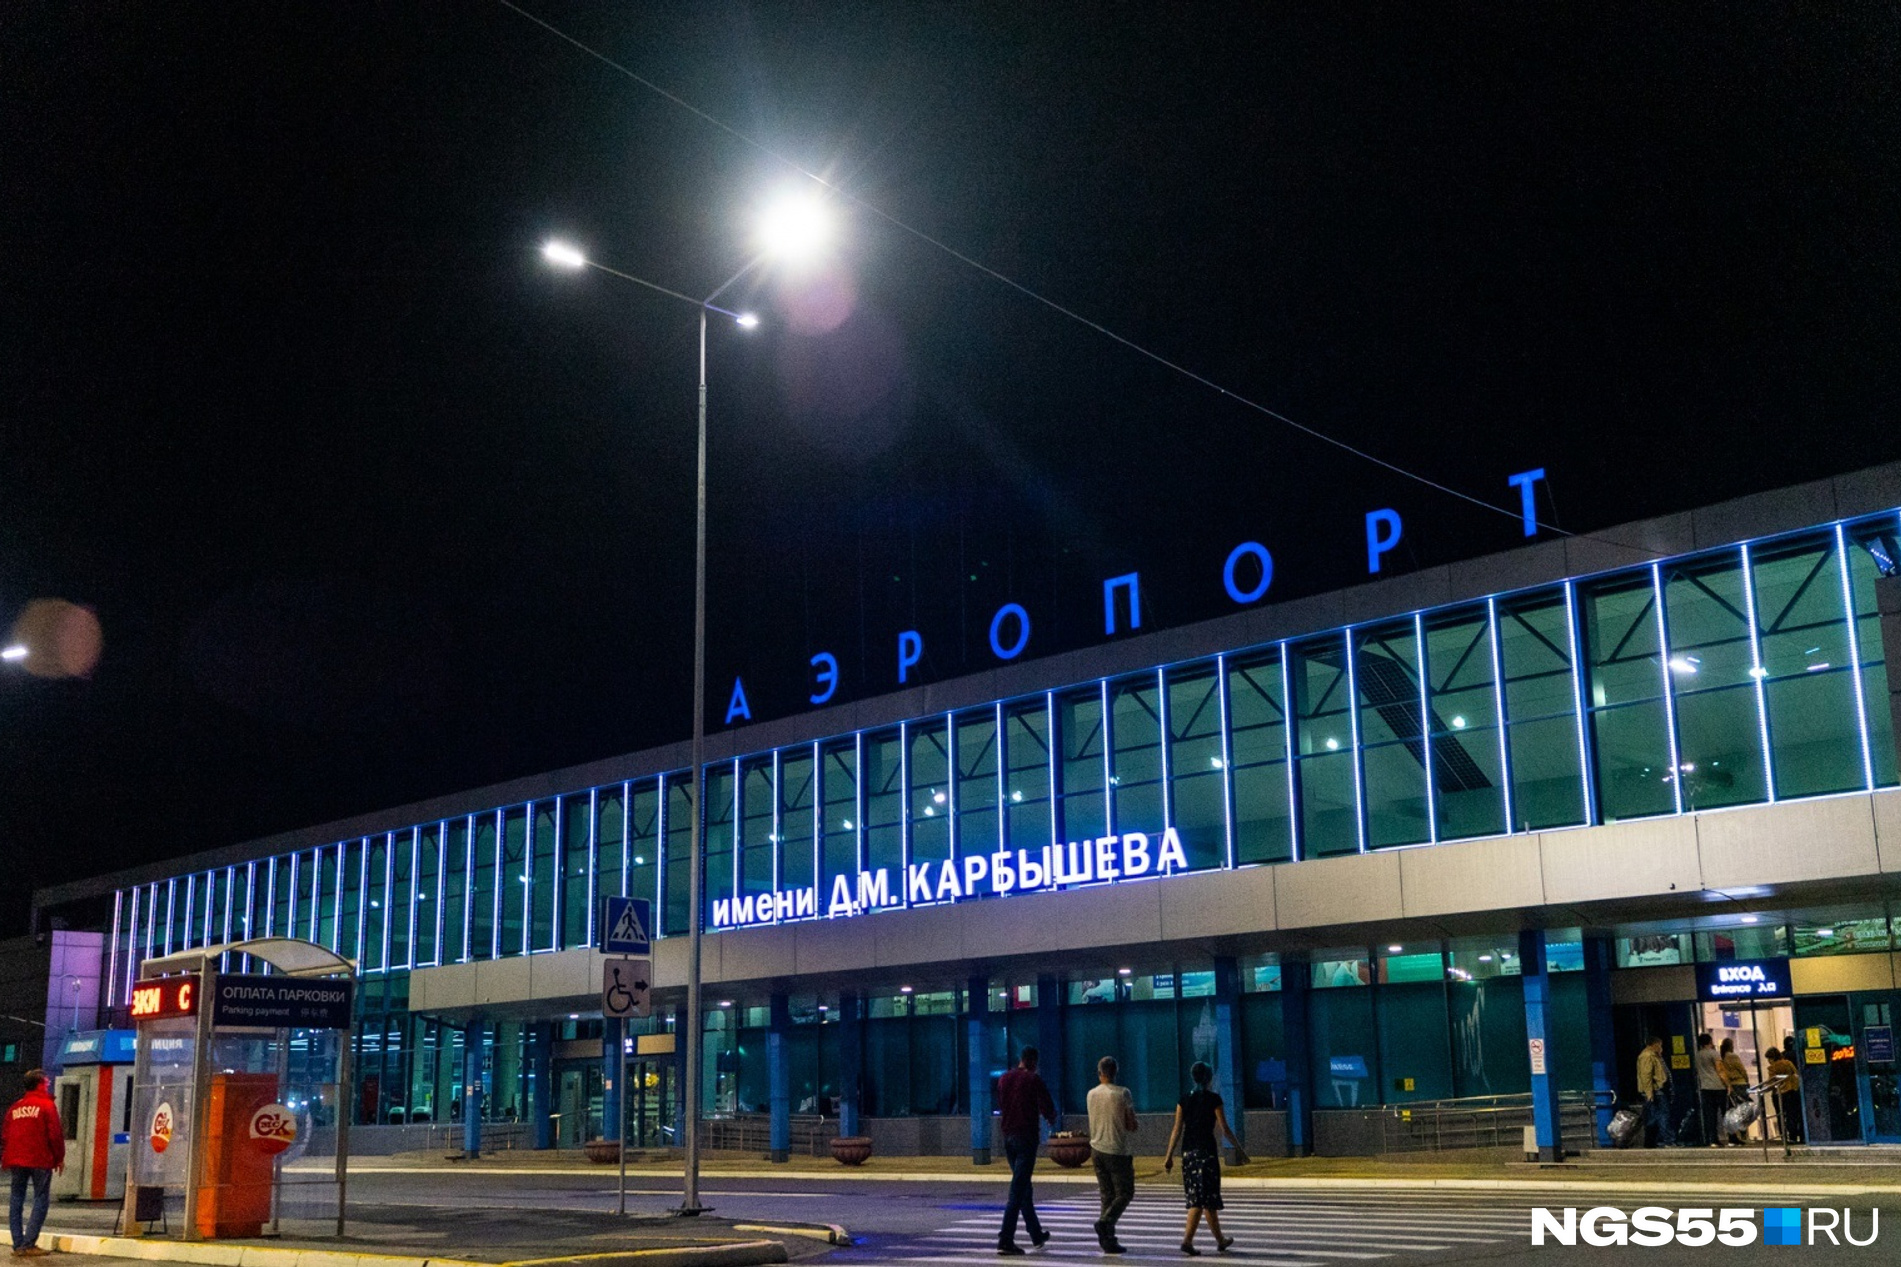 Аэропорт Карбышева Омск. Омский аэропорт зима. Омский аэропорт зимой. Омский аэропорт ночью зимой. Аэропорт омск телефон